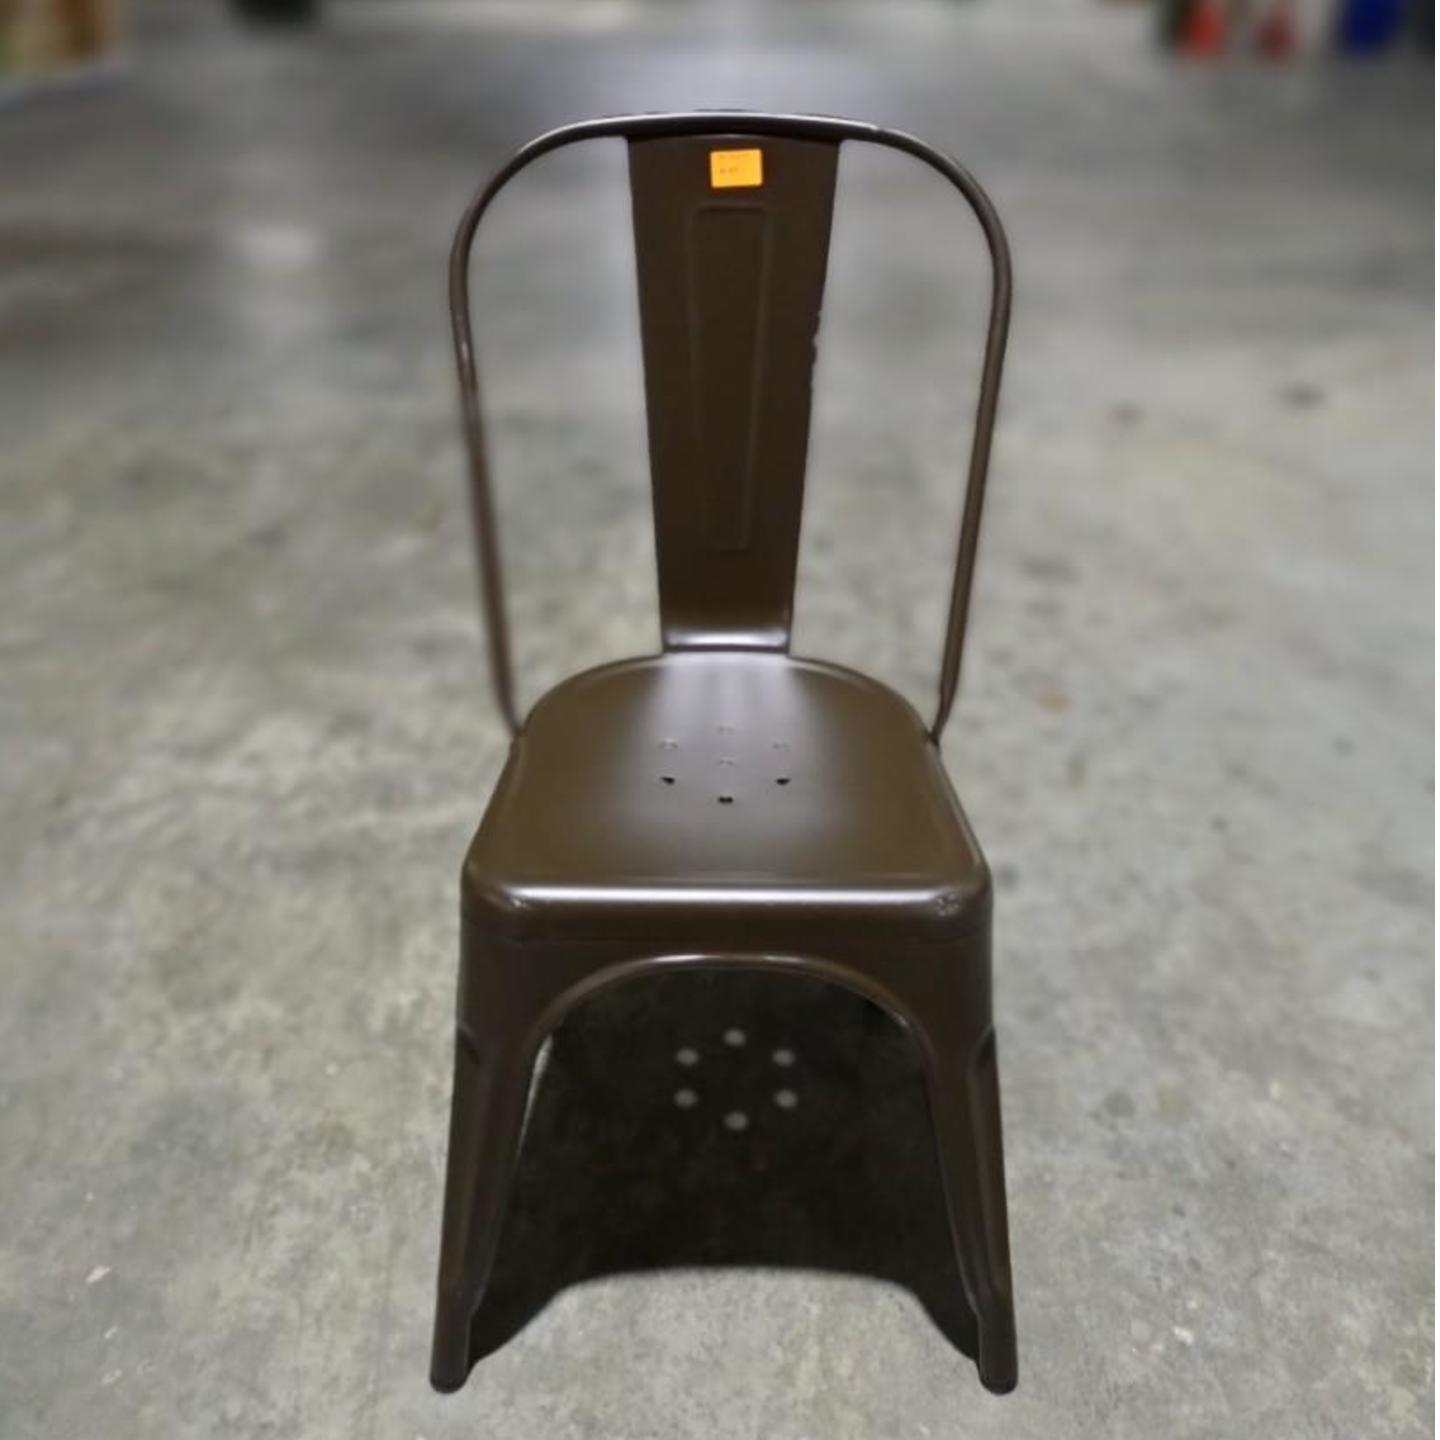 VADO Retro Metal Chair in BROWN